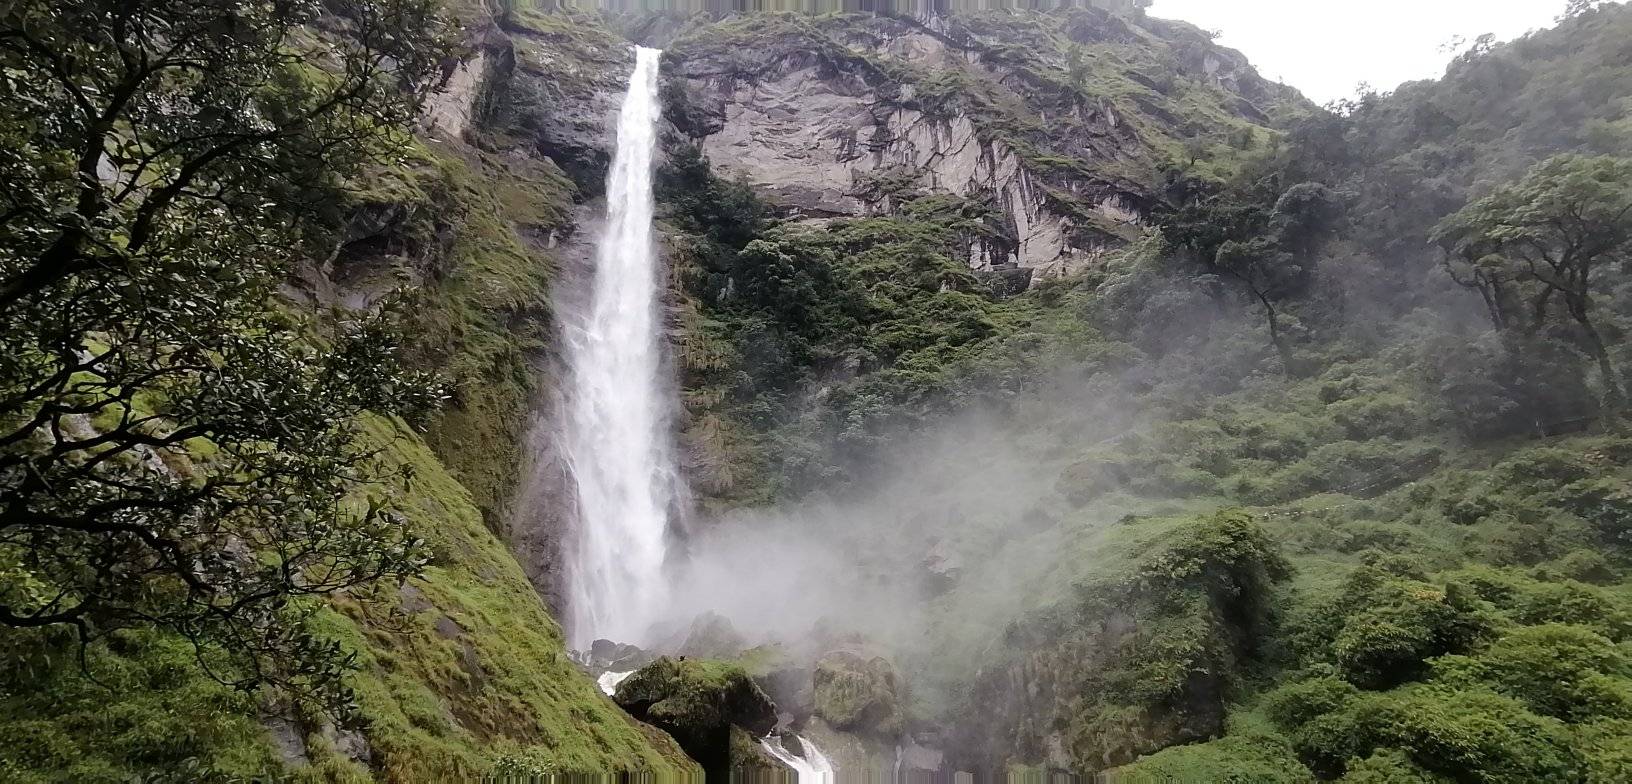 Reasons to visit Fungfunge waterfall in east Nepal